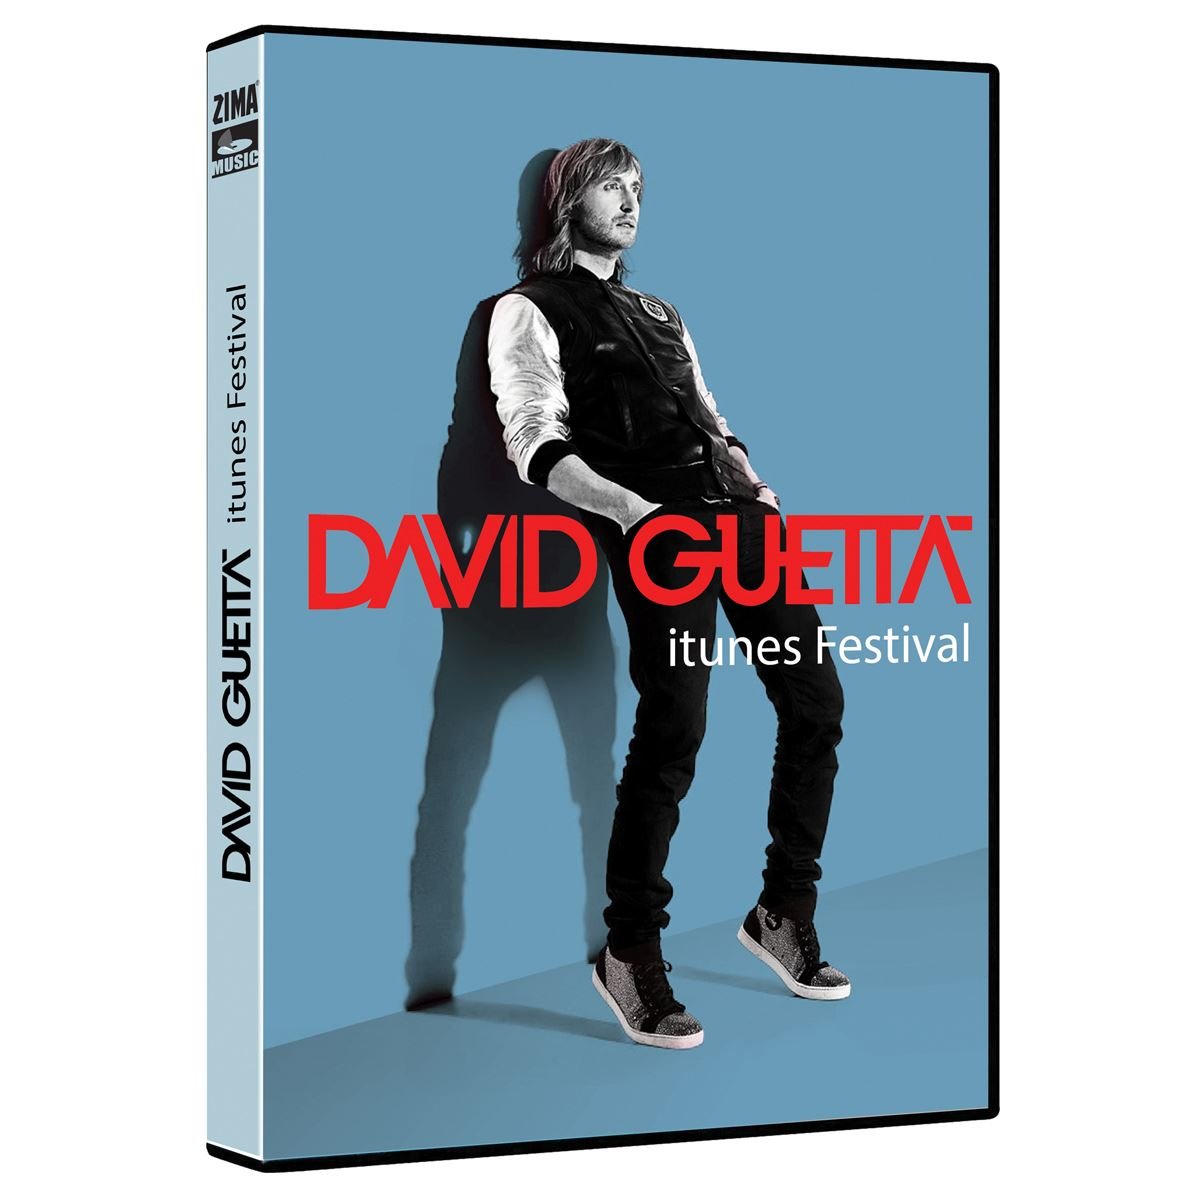 David Guetta iTunes Festival